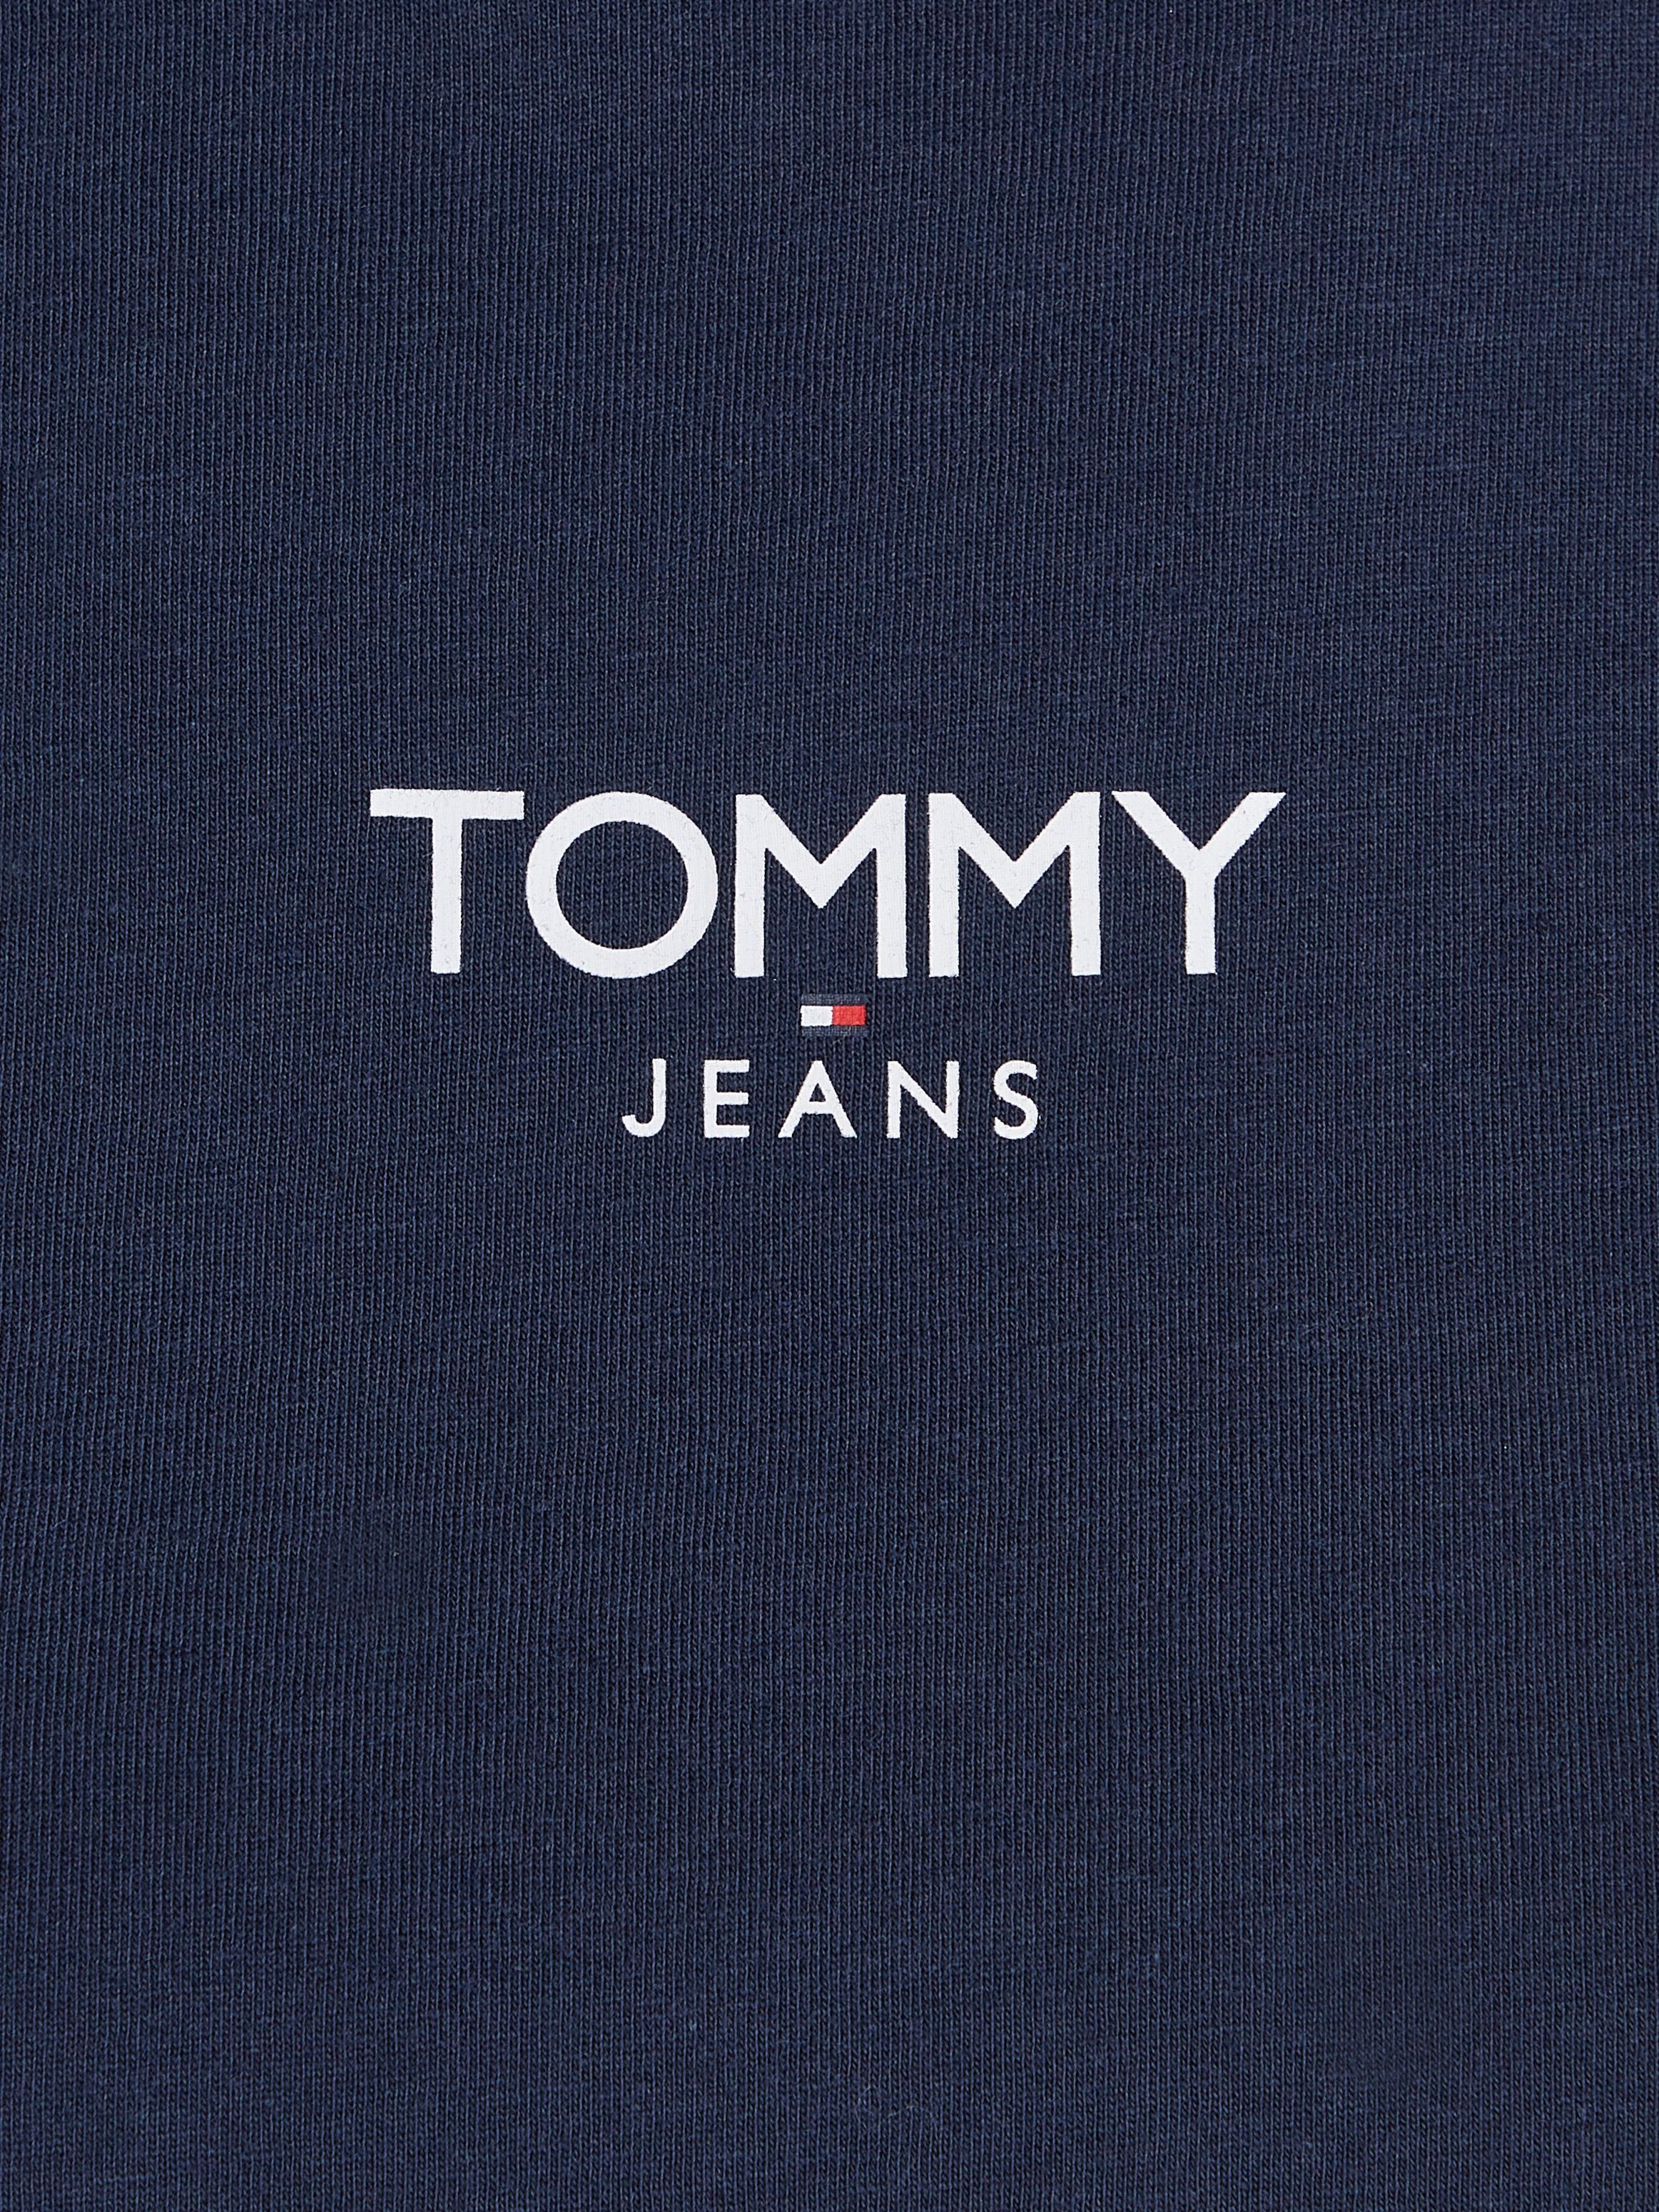 Navy 1 Twilight Jeans BBY Tommy T-Shirt Jeans Tommy LOGO SS TJW mit ESSENTIAL Logo